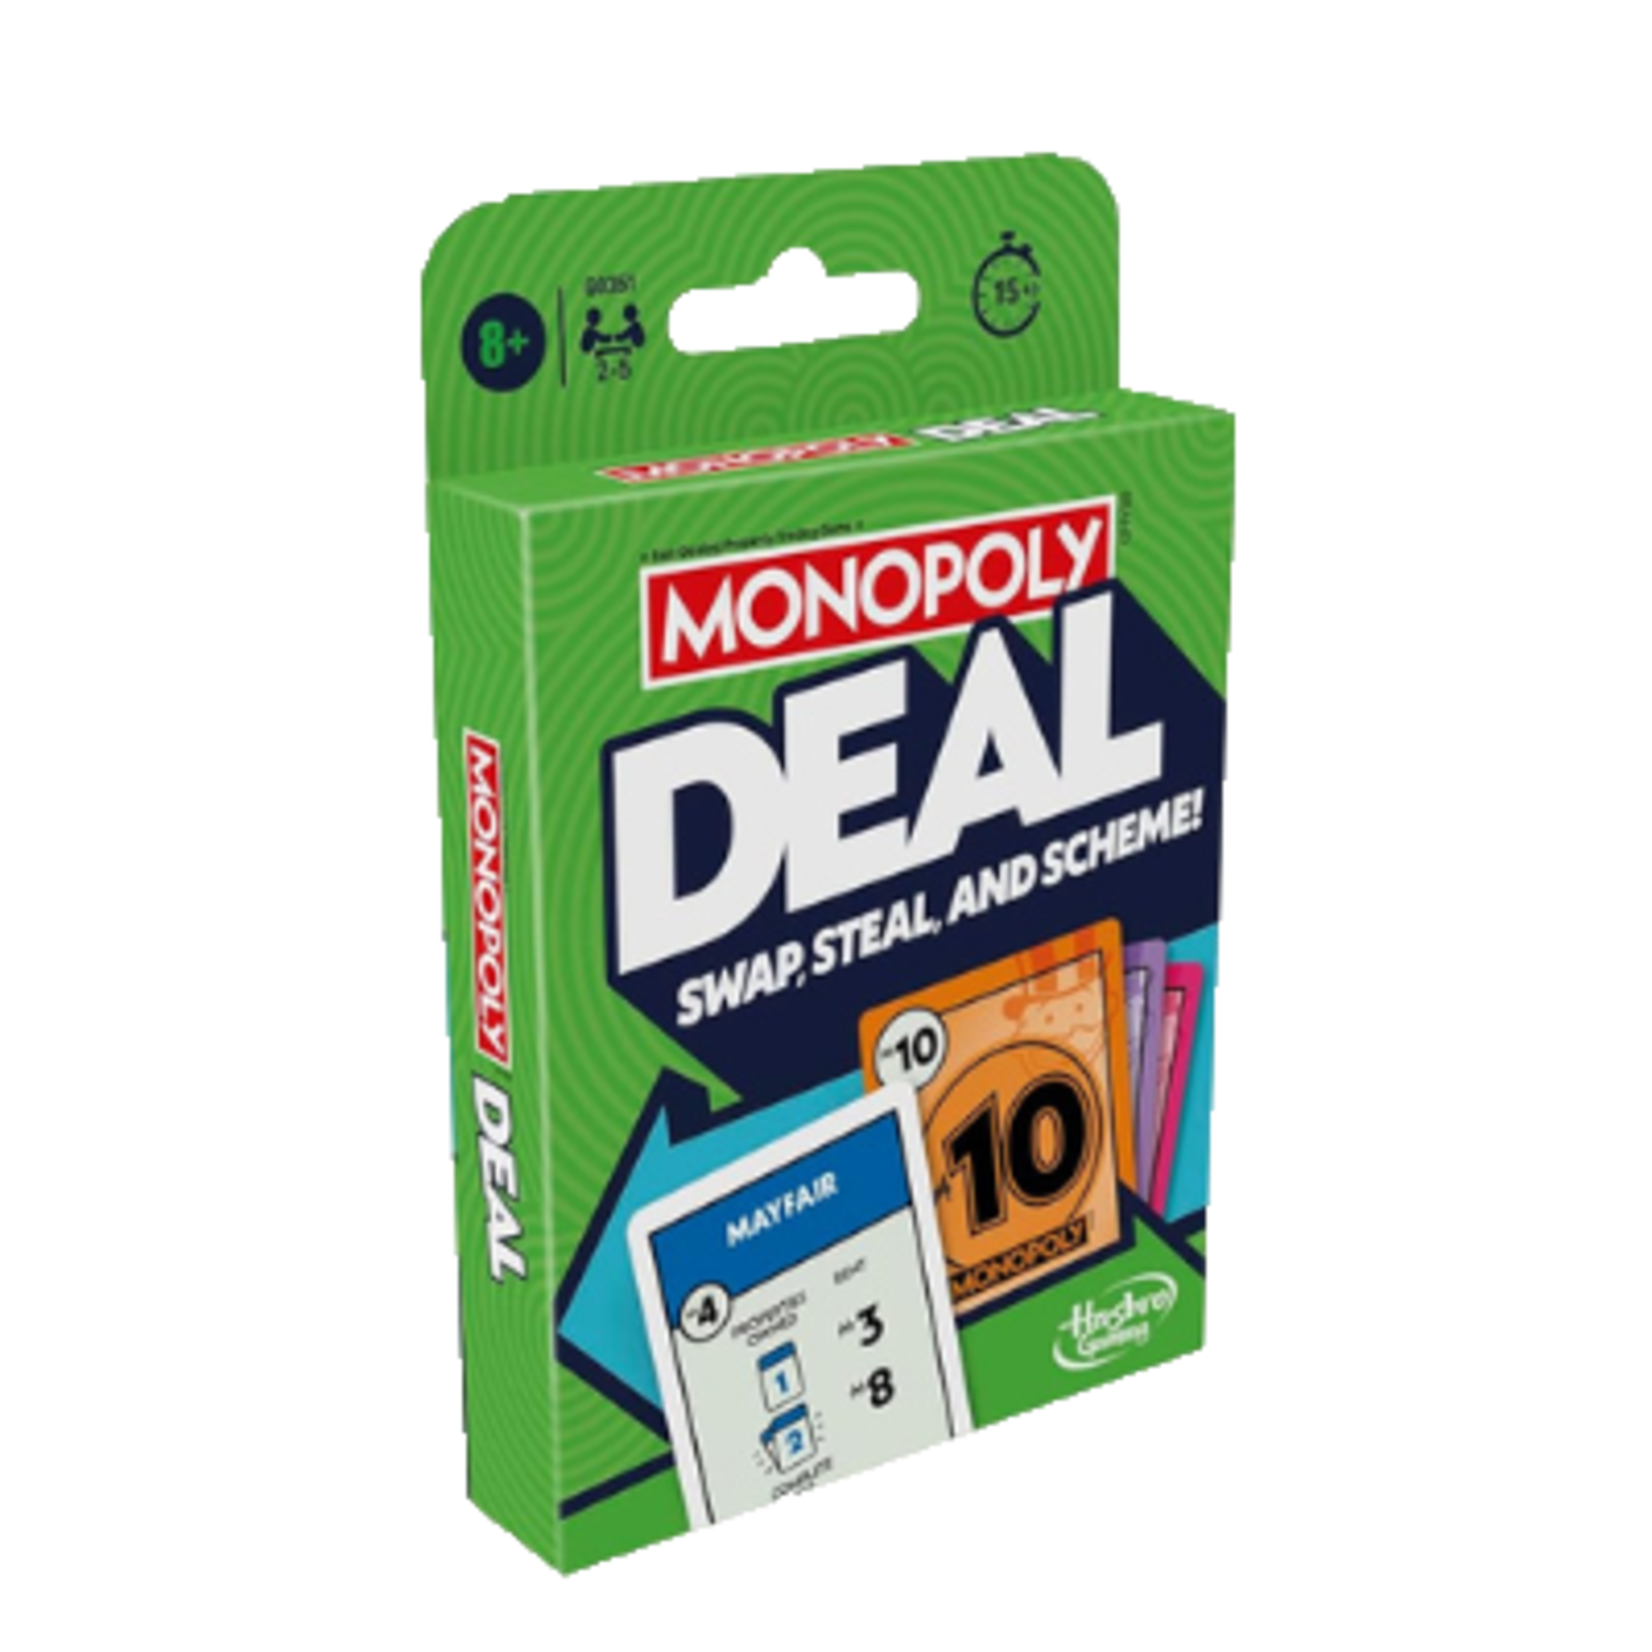 Hasbro Monopoly Deal: Refresh